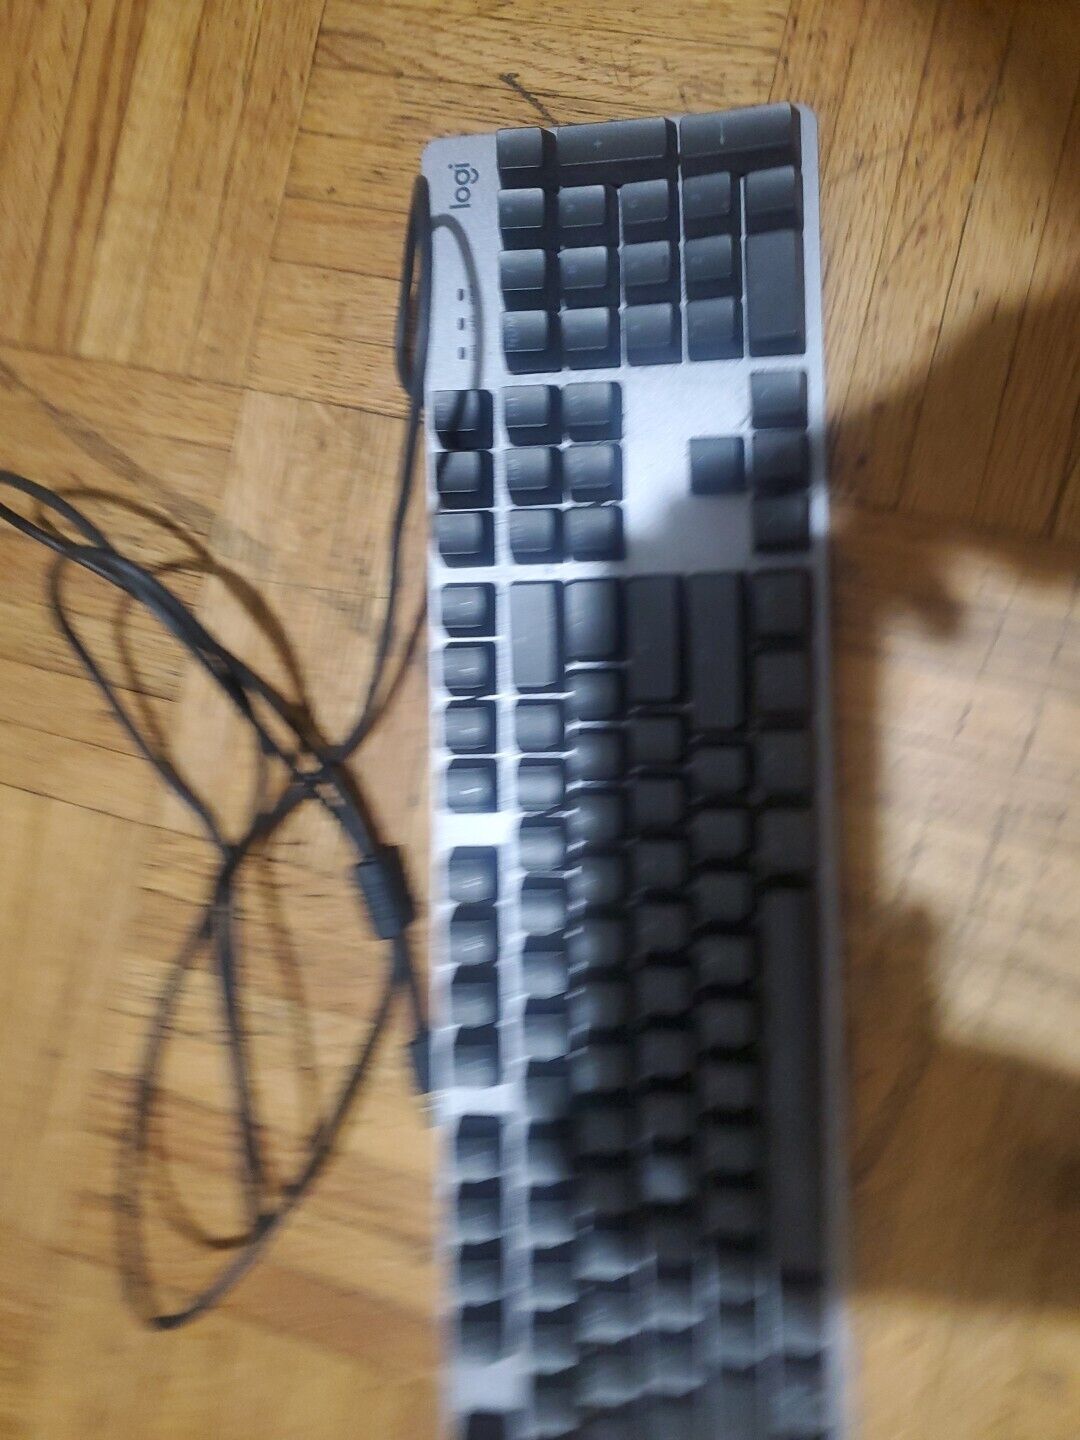 Logitech K845 Mechanical Illuminated Keyboard, Mechanical (TTC Blue Switches)